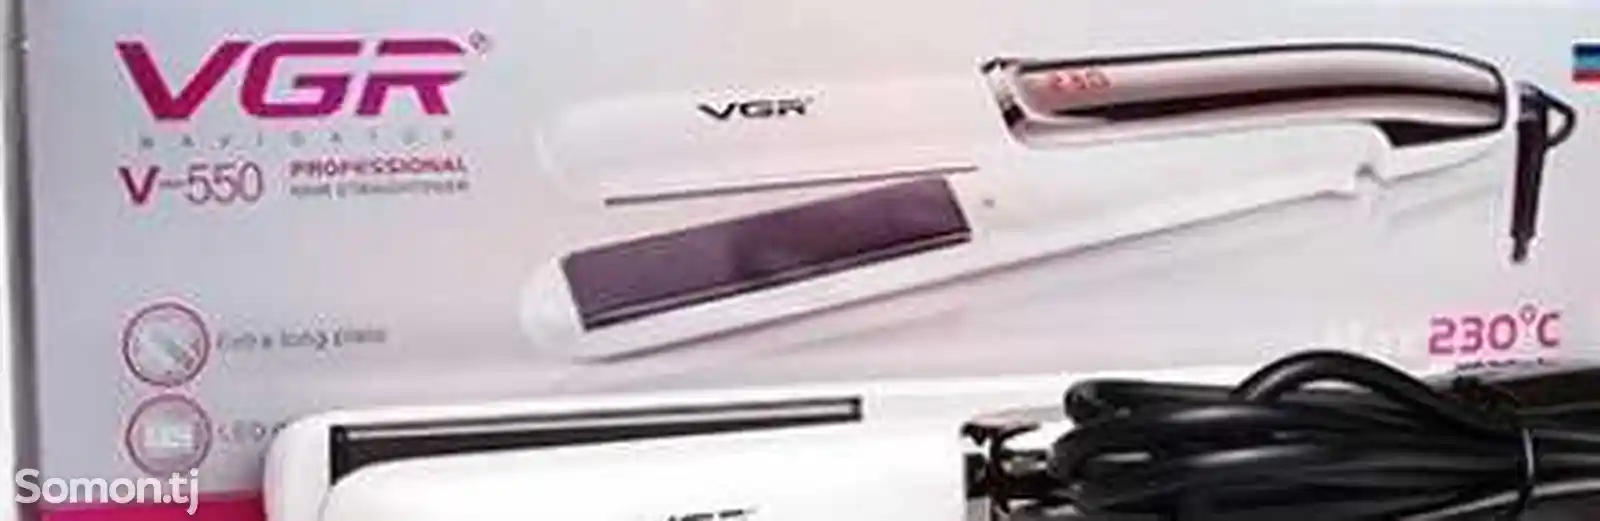 Утюжок VGR V-550-1